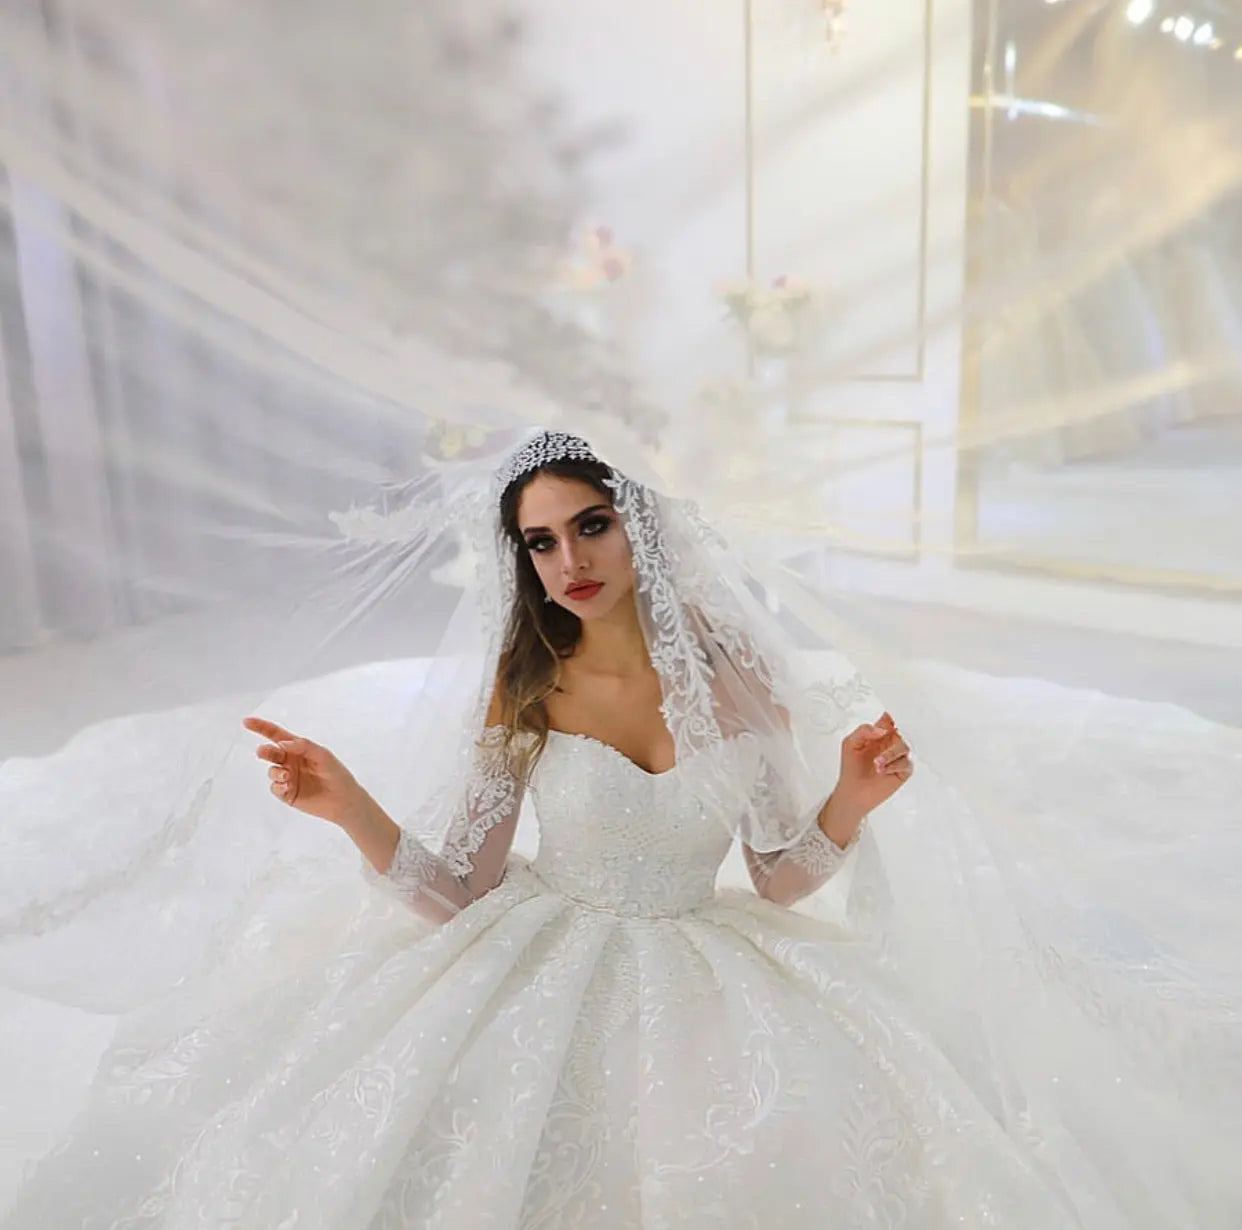 White Off The Shoulder Lace Bridal Dress Mscooco.co.uk